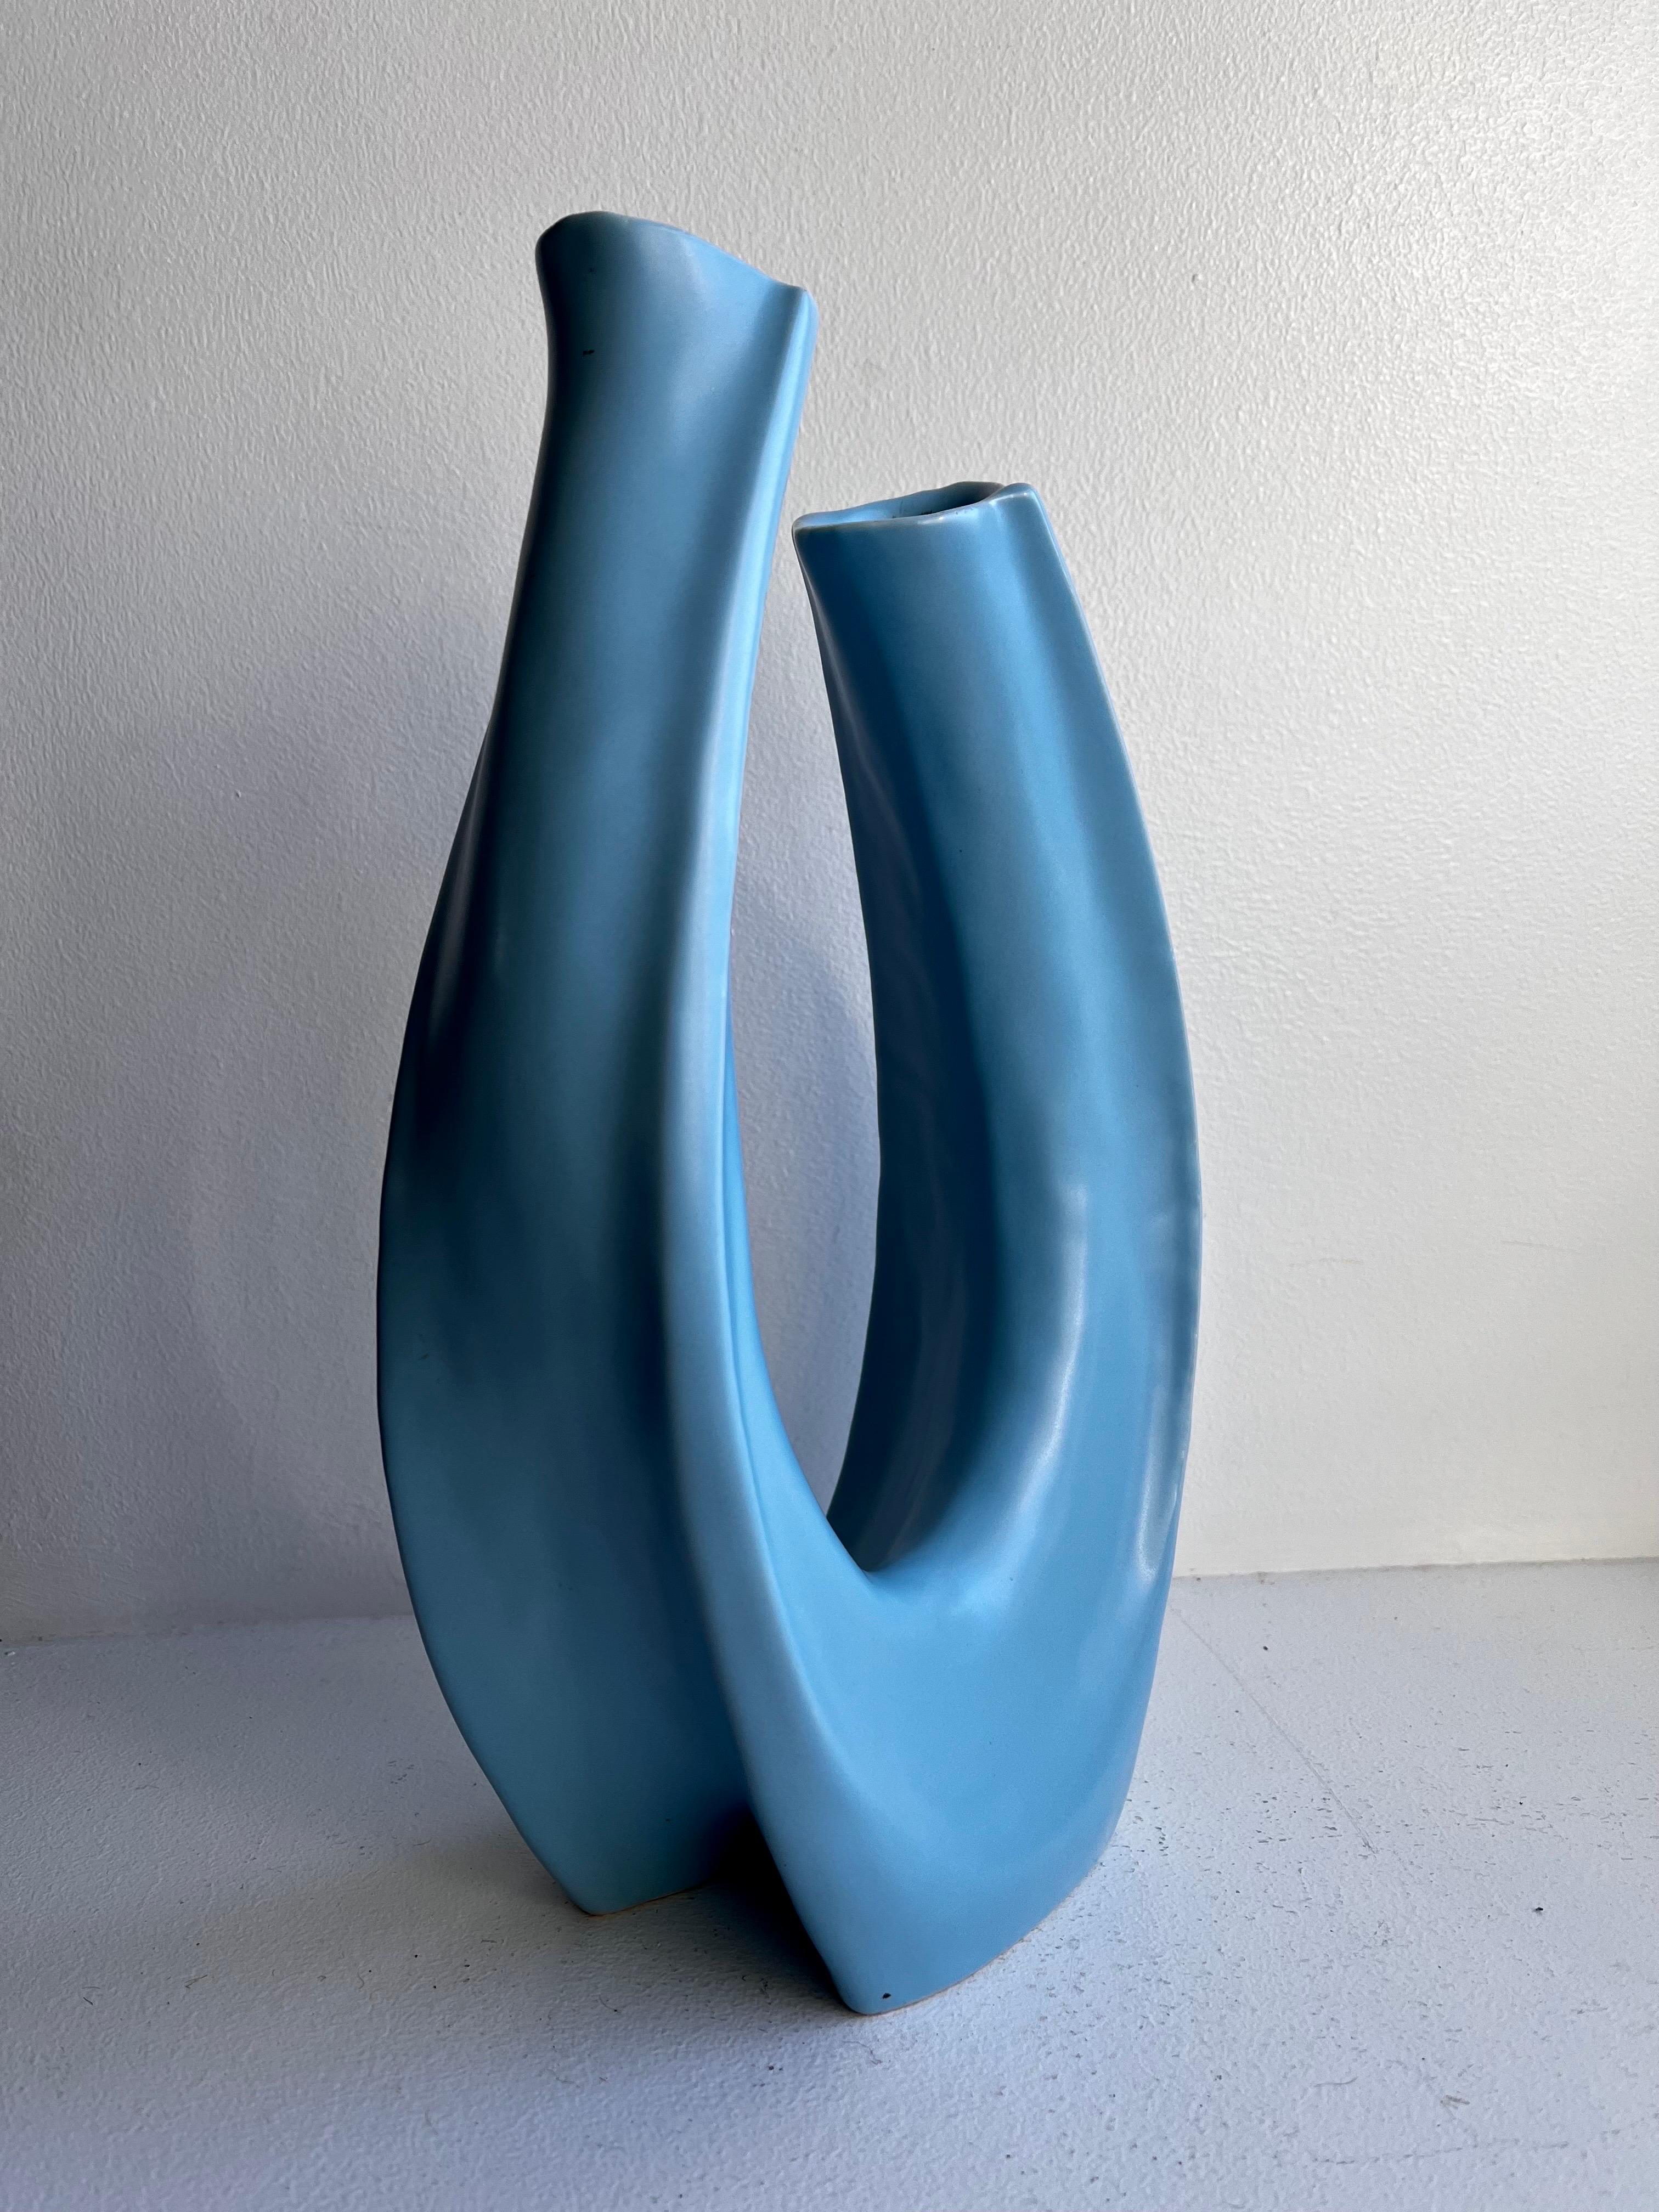 Skulpturale Ikebana-Keramik-Vase
um 1965
Doppelter 